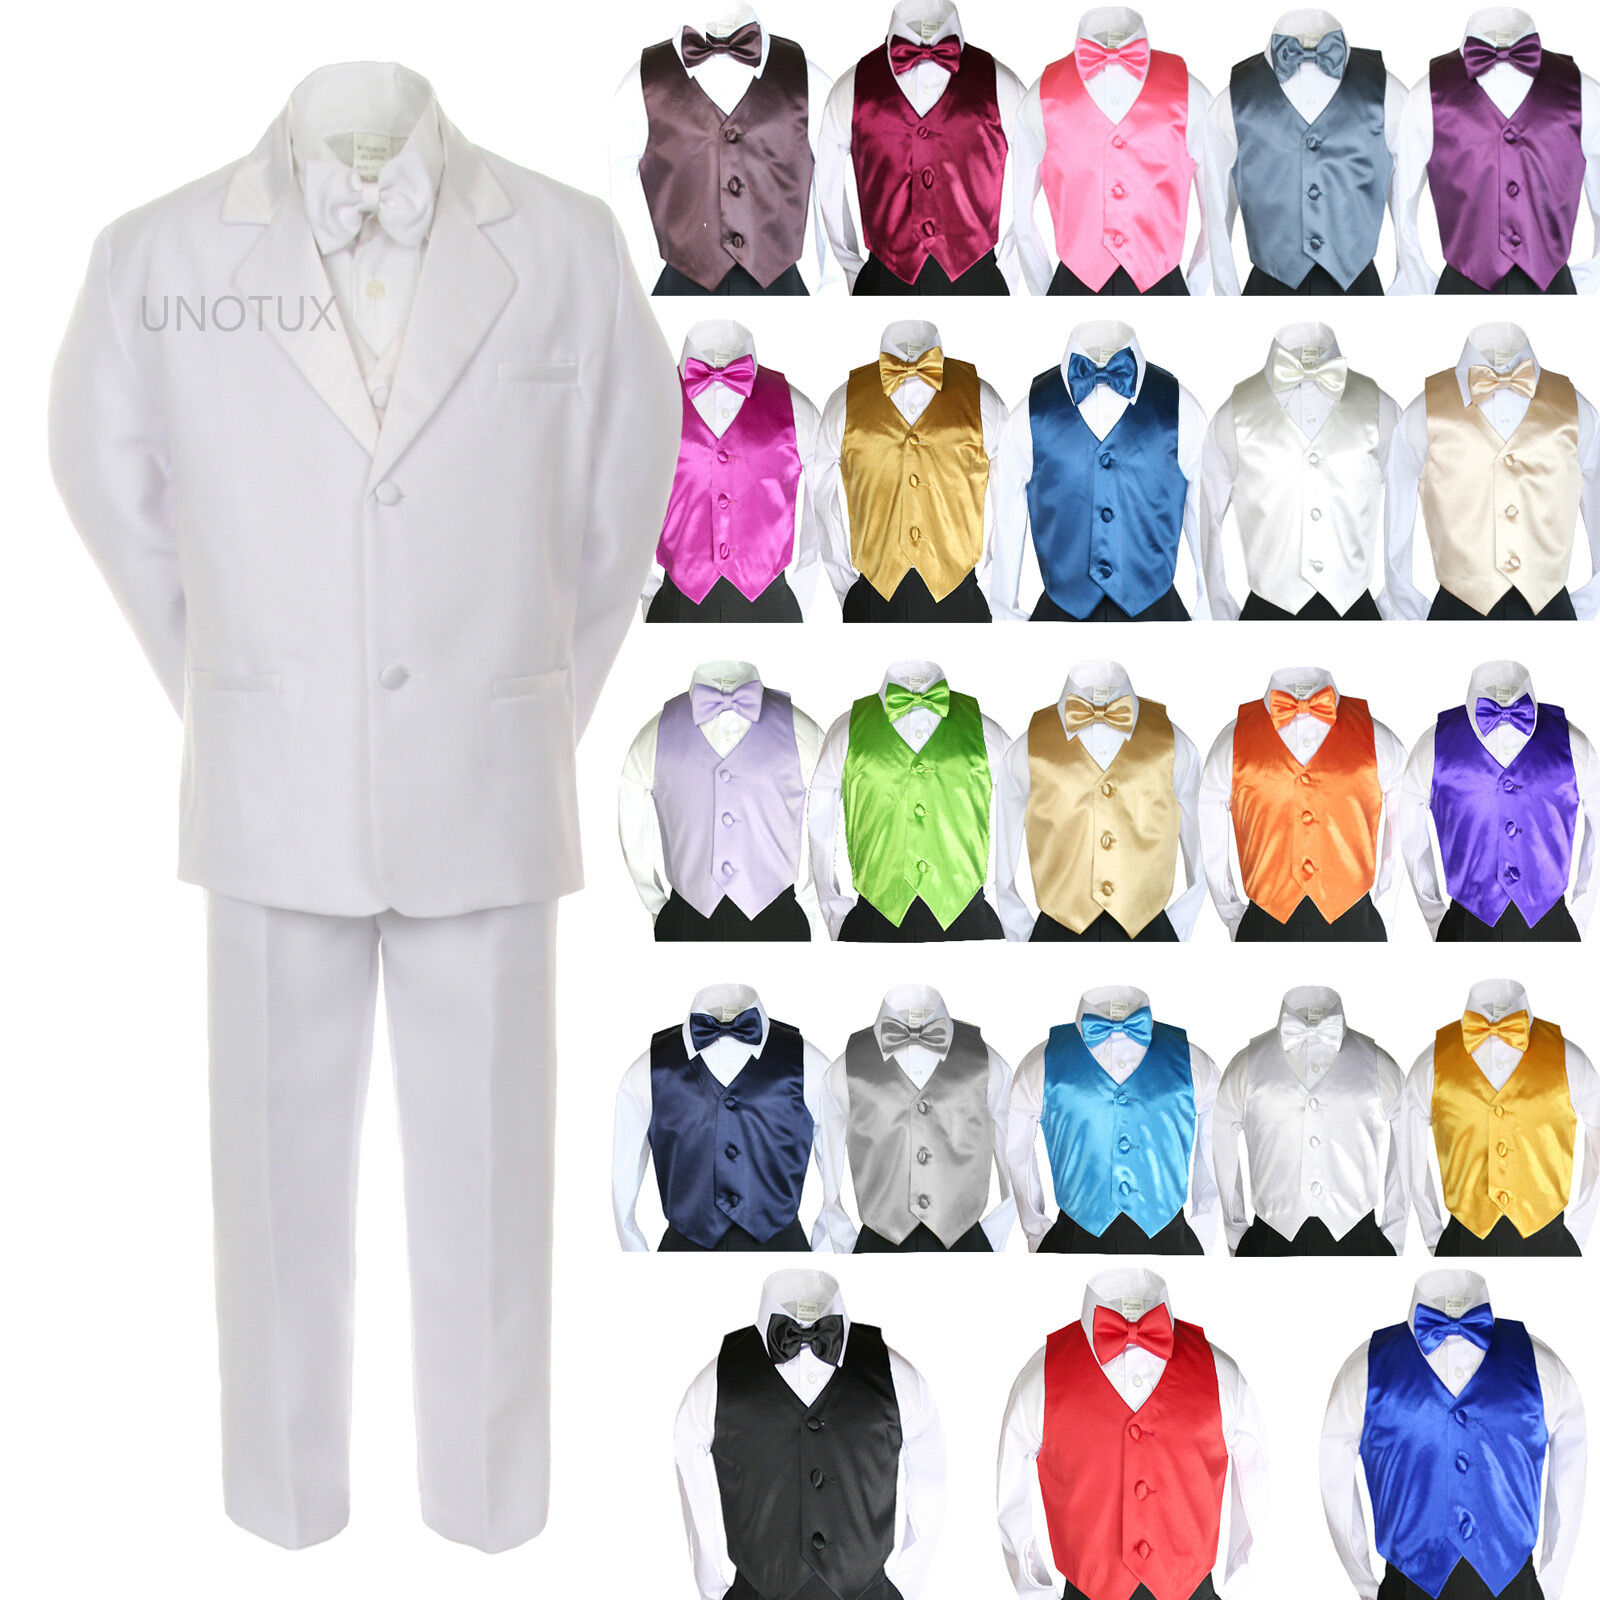 New Boy Kid Formal Wedding 7pc White Suit Tuxedo Royal Blue Vest Tie sz 4-14